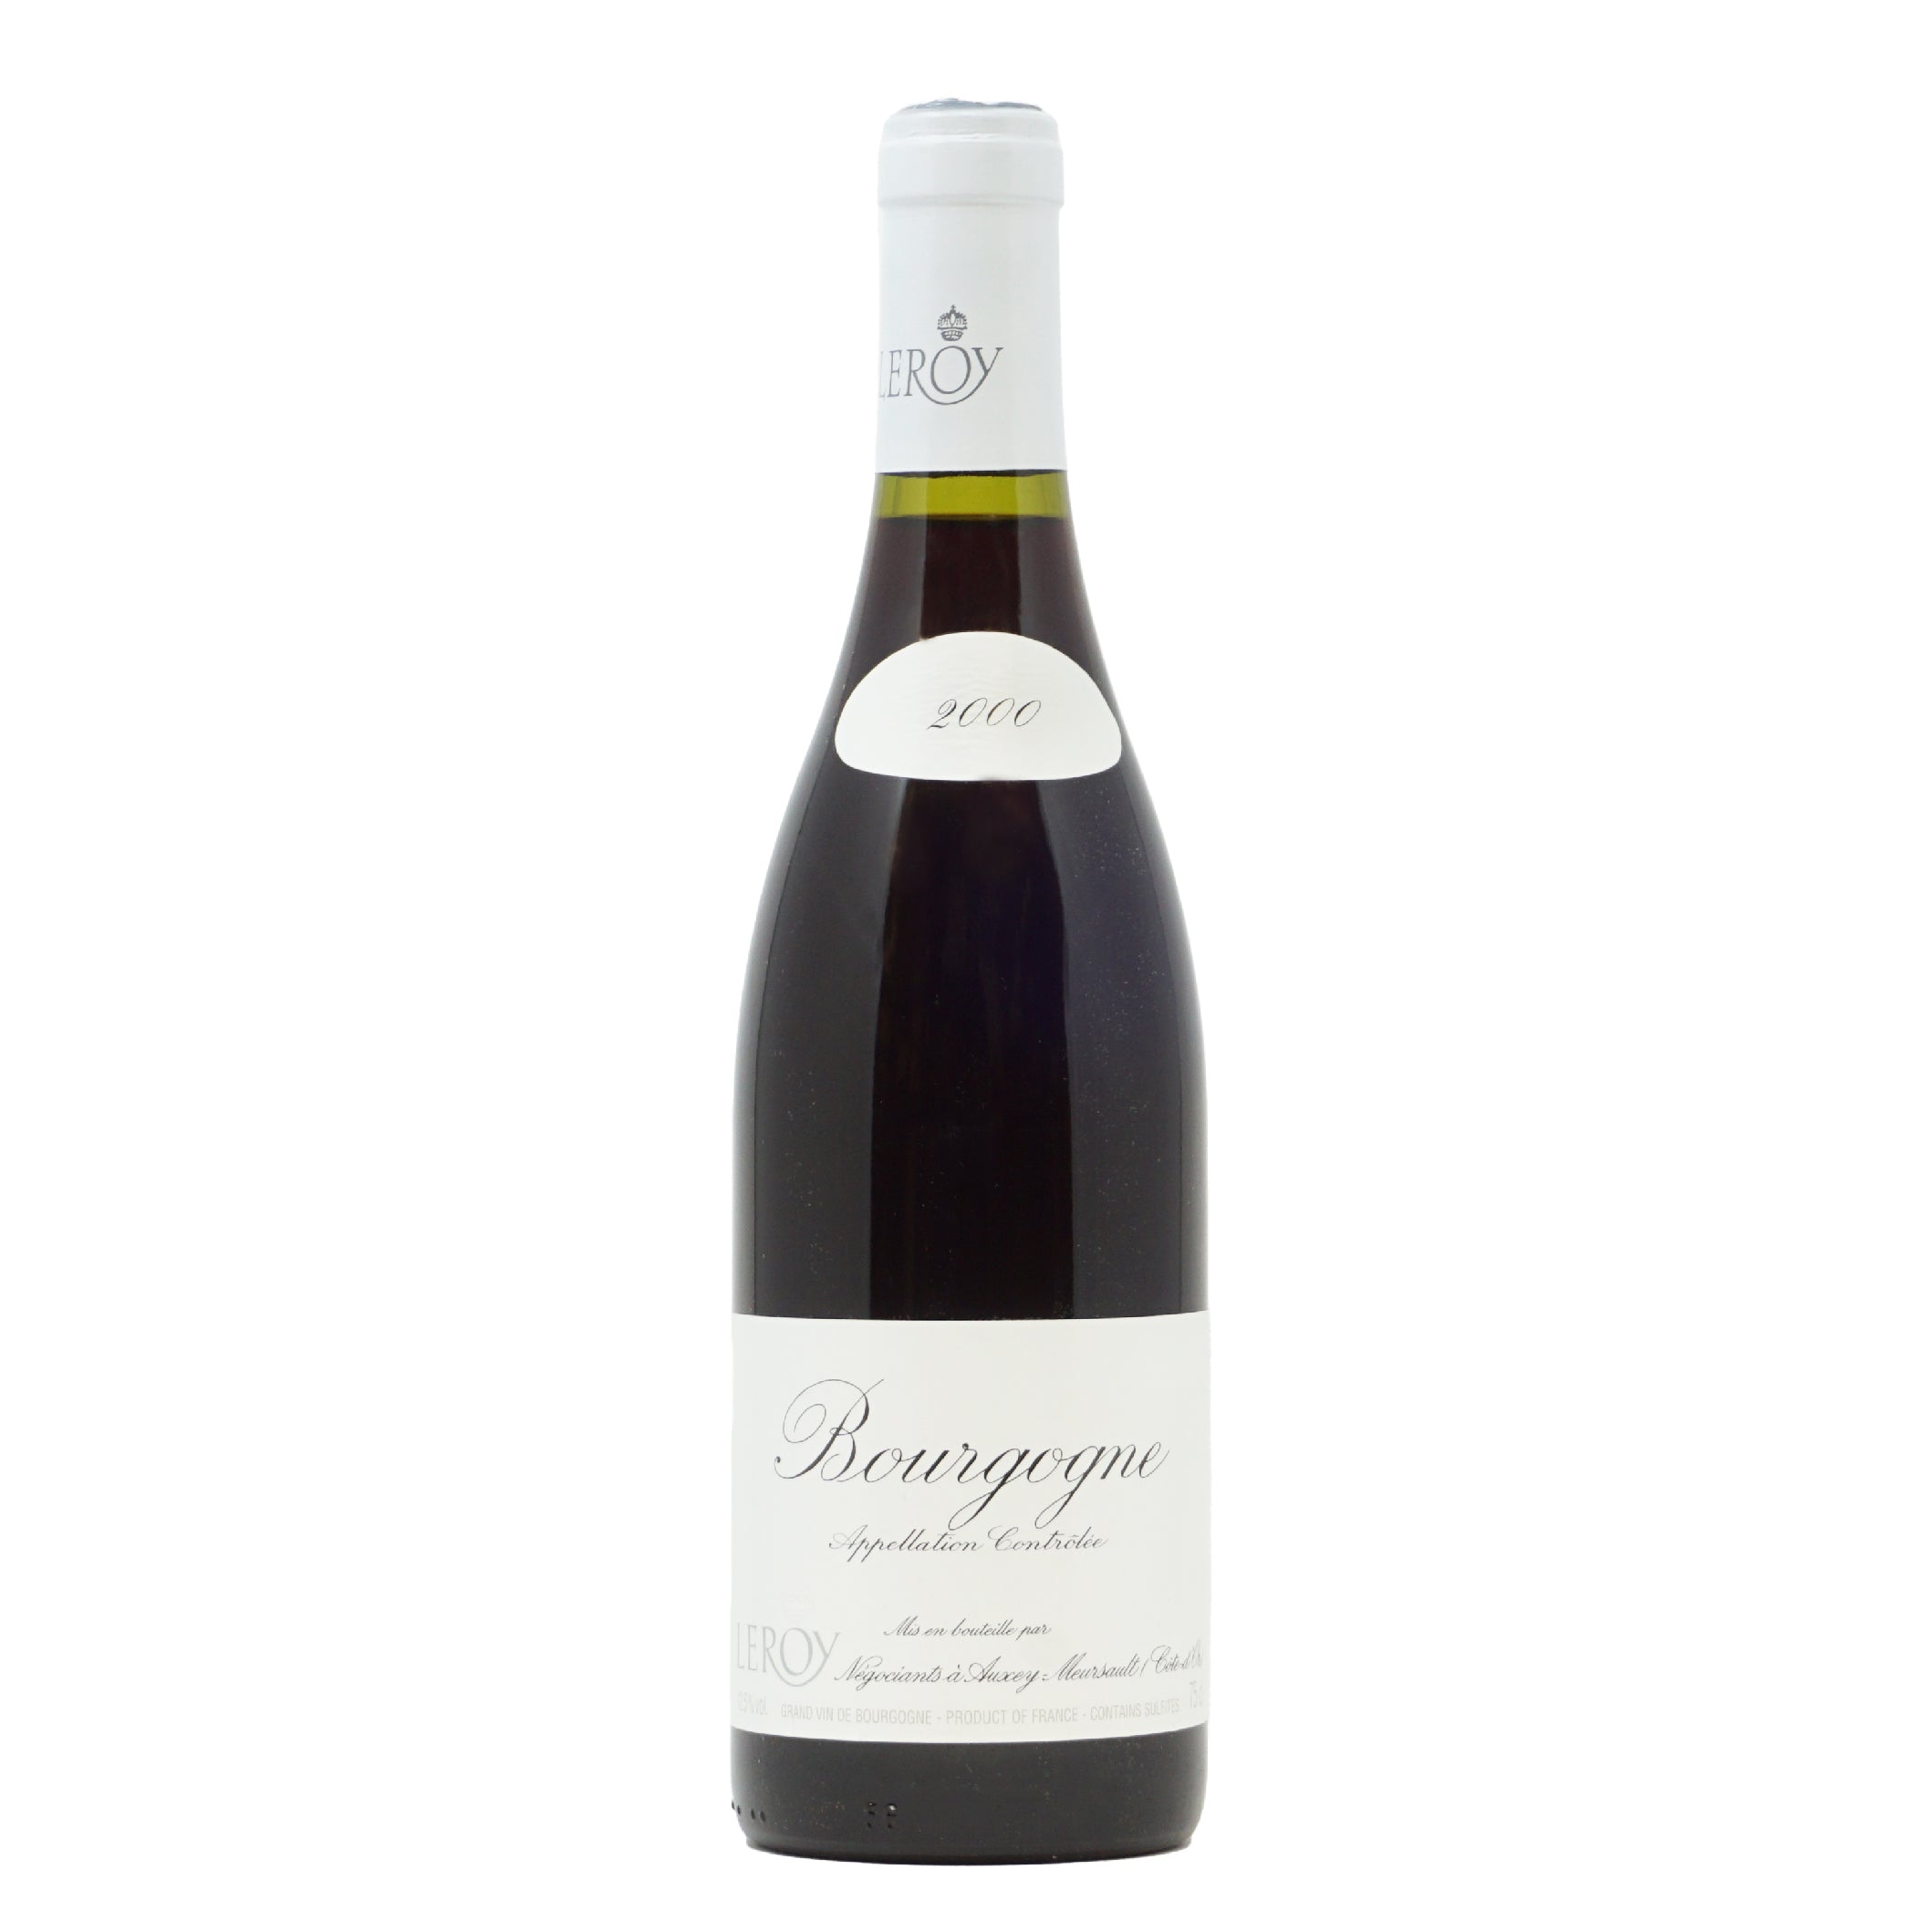 Bourgogne Rouge 2000 Leroy Negociant lt.0.750